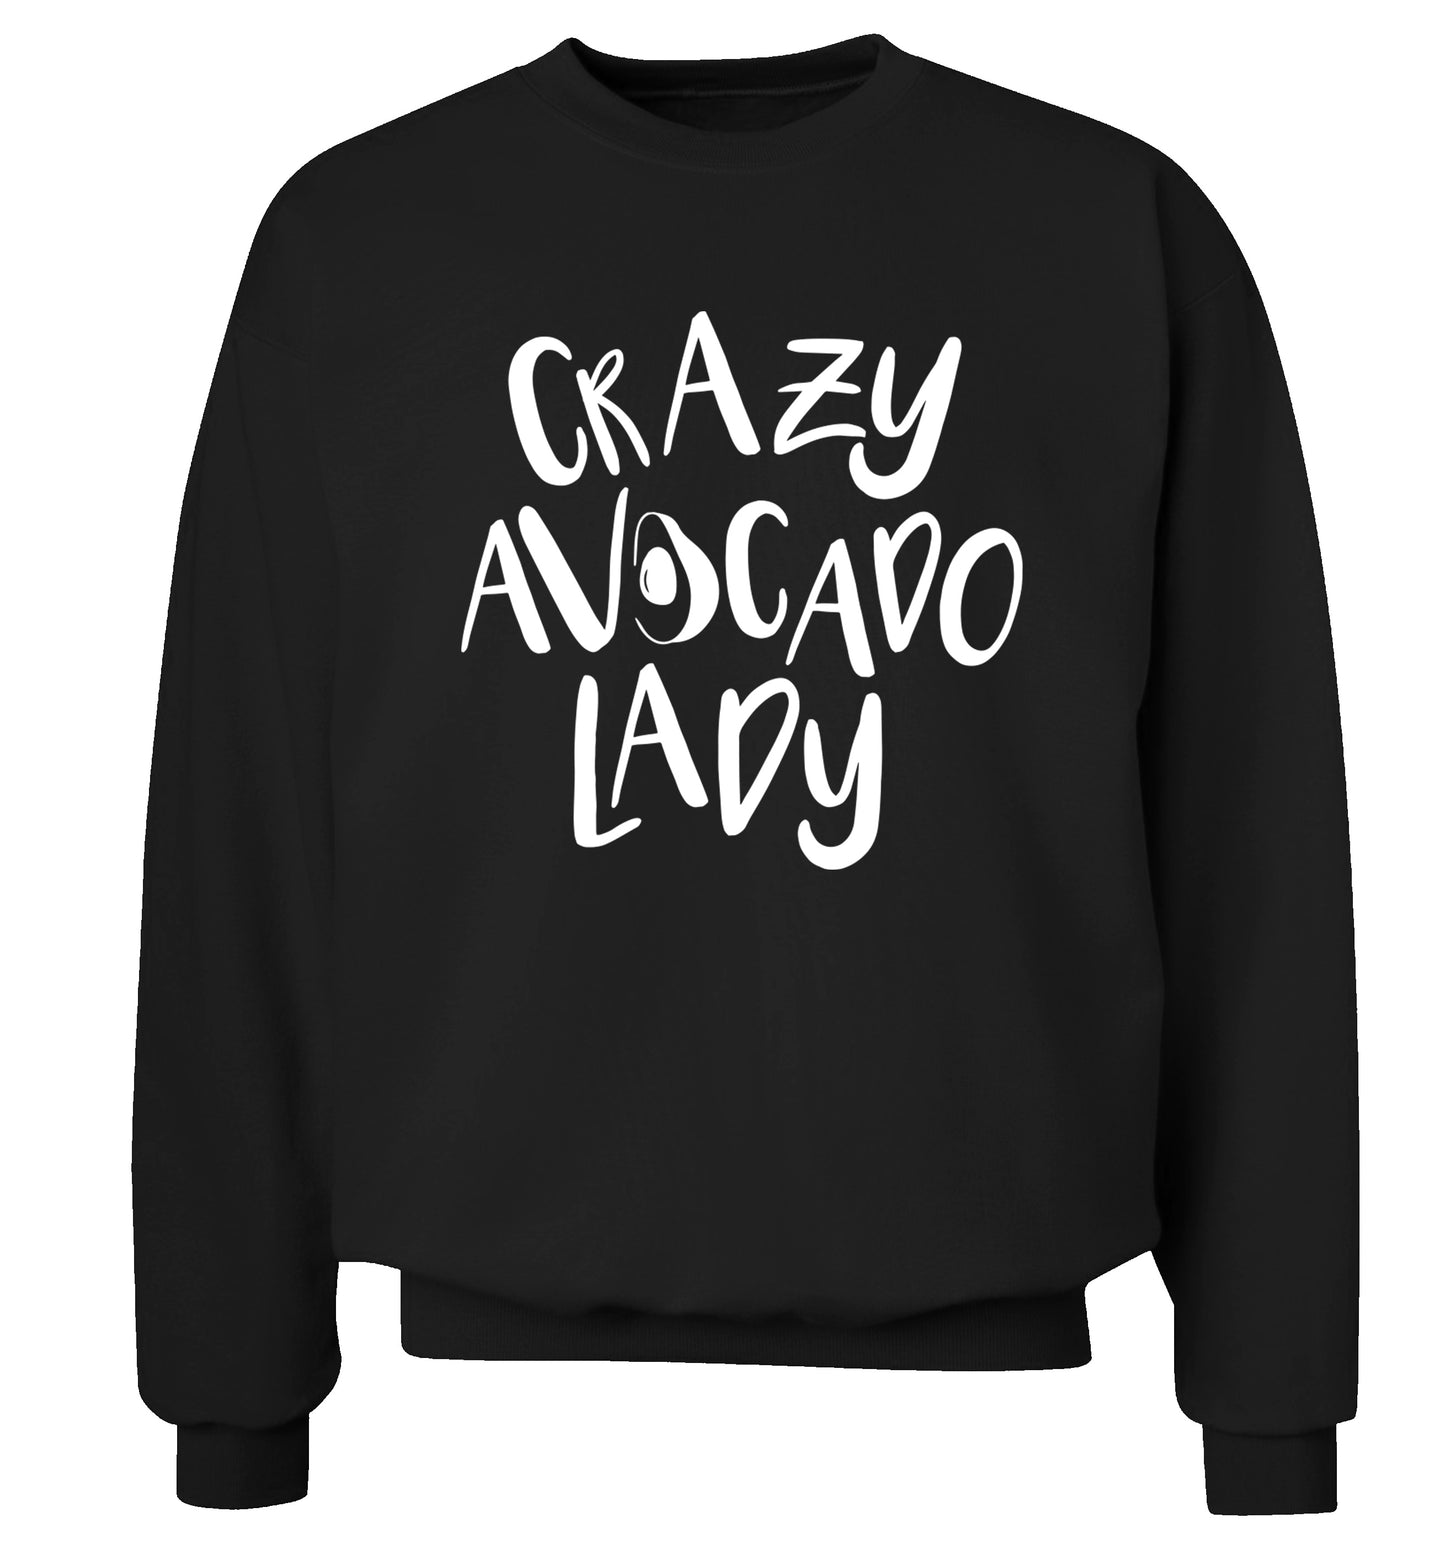 Crazy avocado lady Adult's unisex black Sweater 2XL